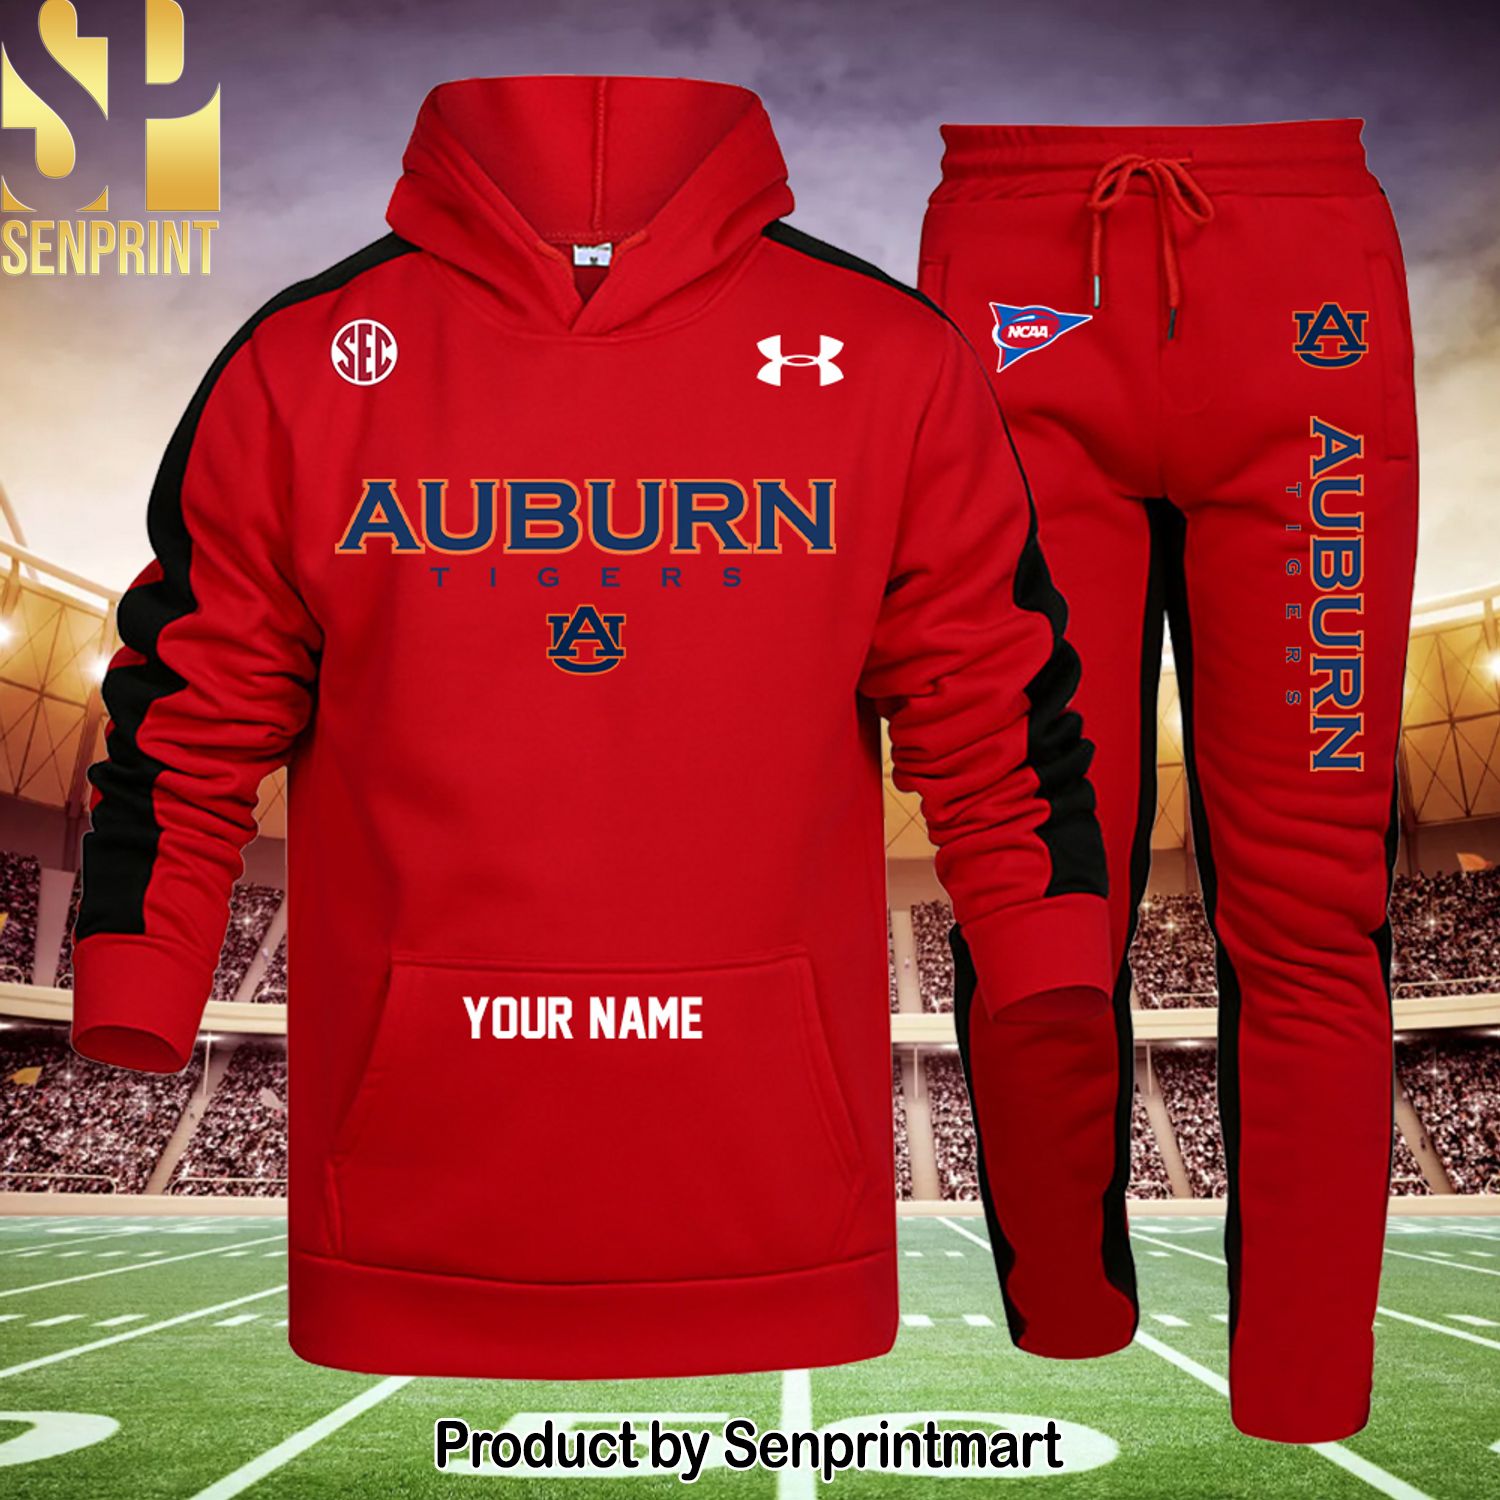 Auburn Tigers Football Unisex Full Printing Shirt and Pants